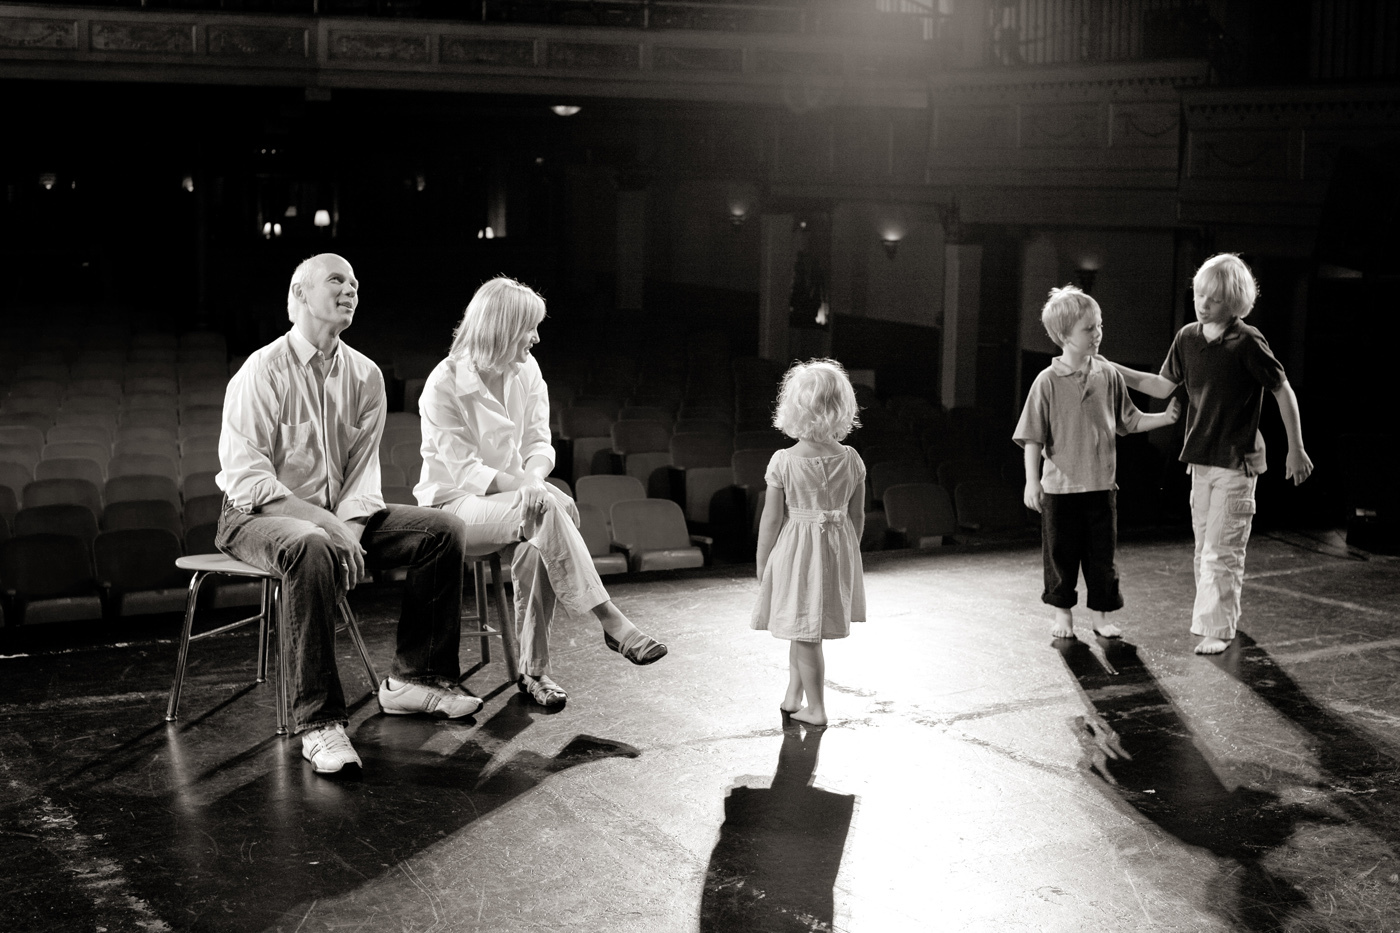 the Gilmores on stage, NY : Encounters : David Burnett | Photographer